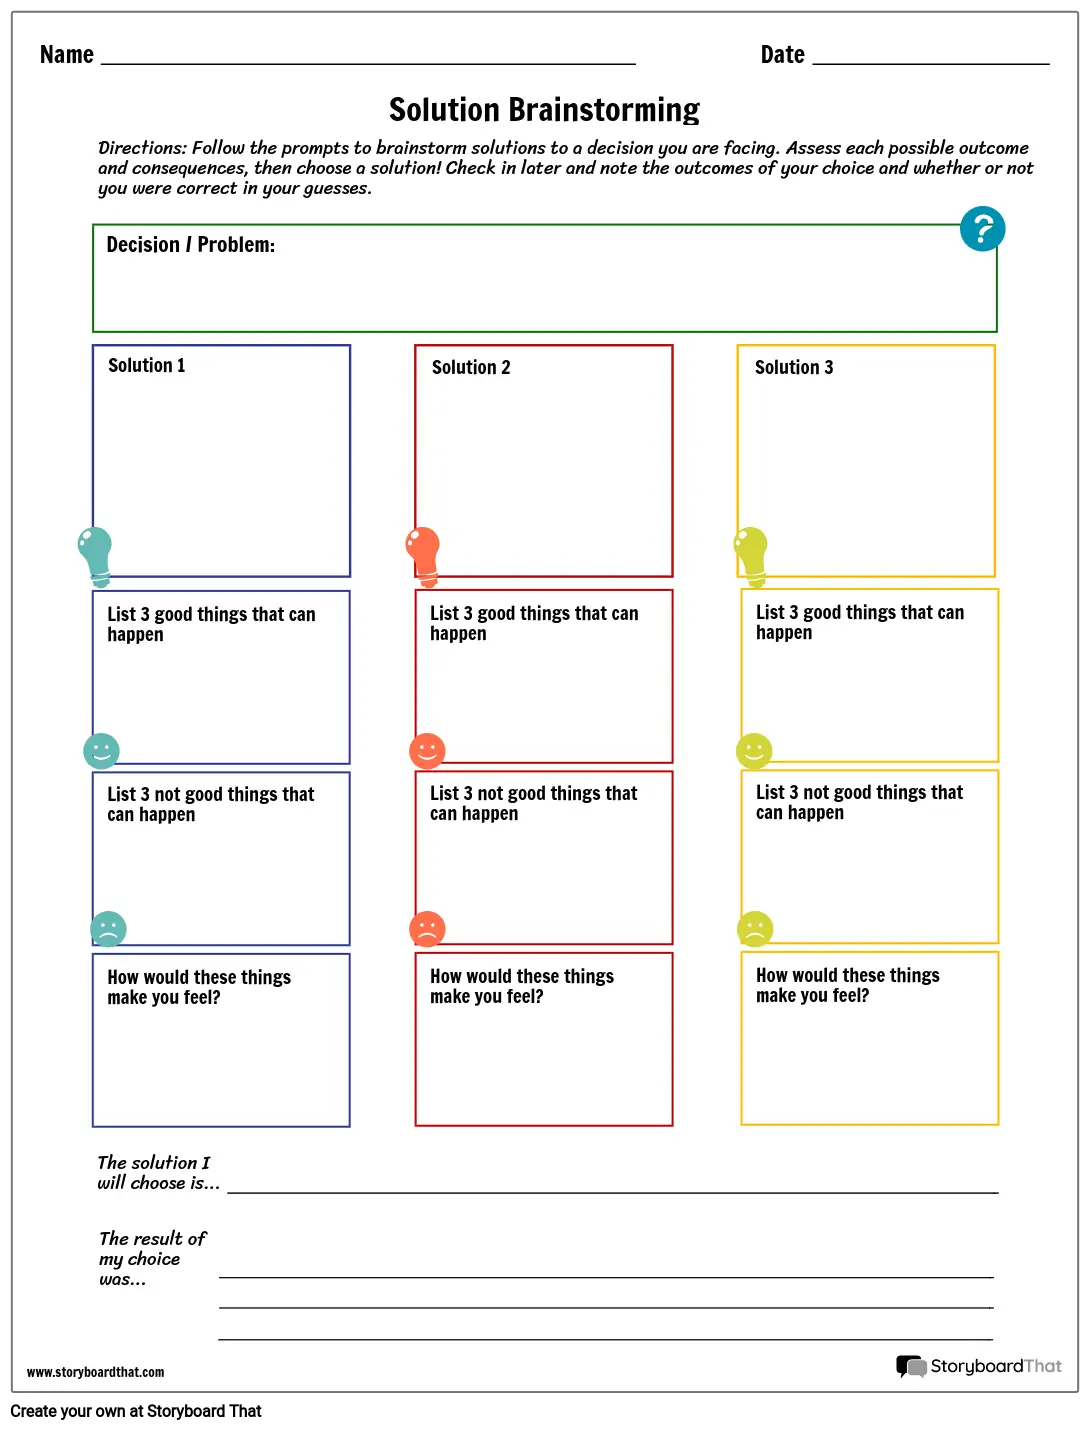 Decision Making Worksheet  Brainstorming Solutions Throughout Making Good Choices Worksheet